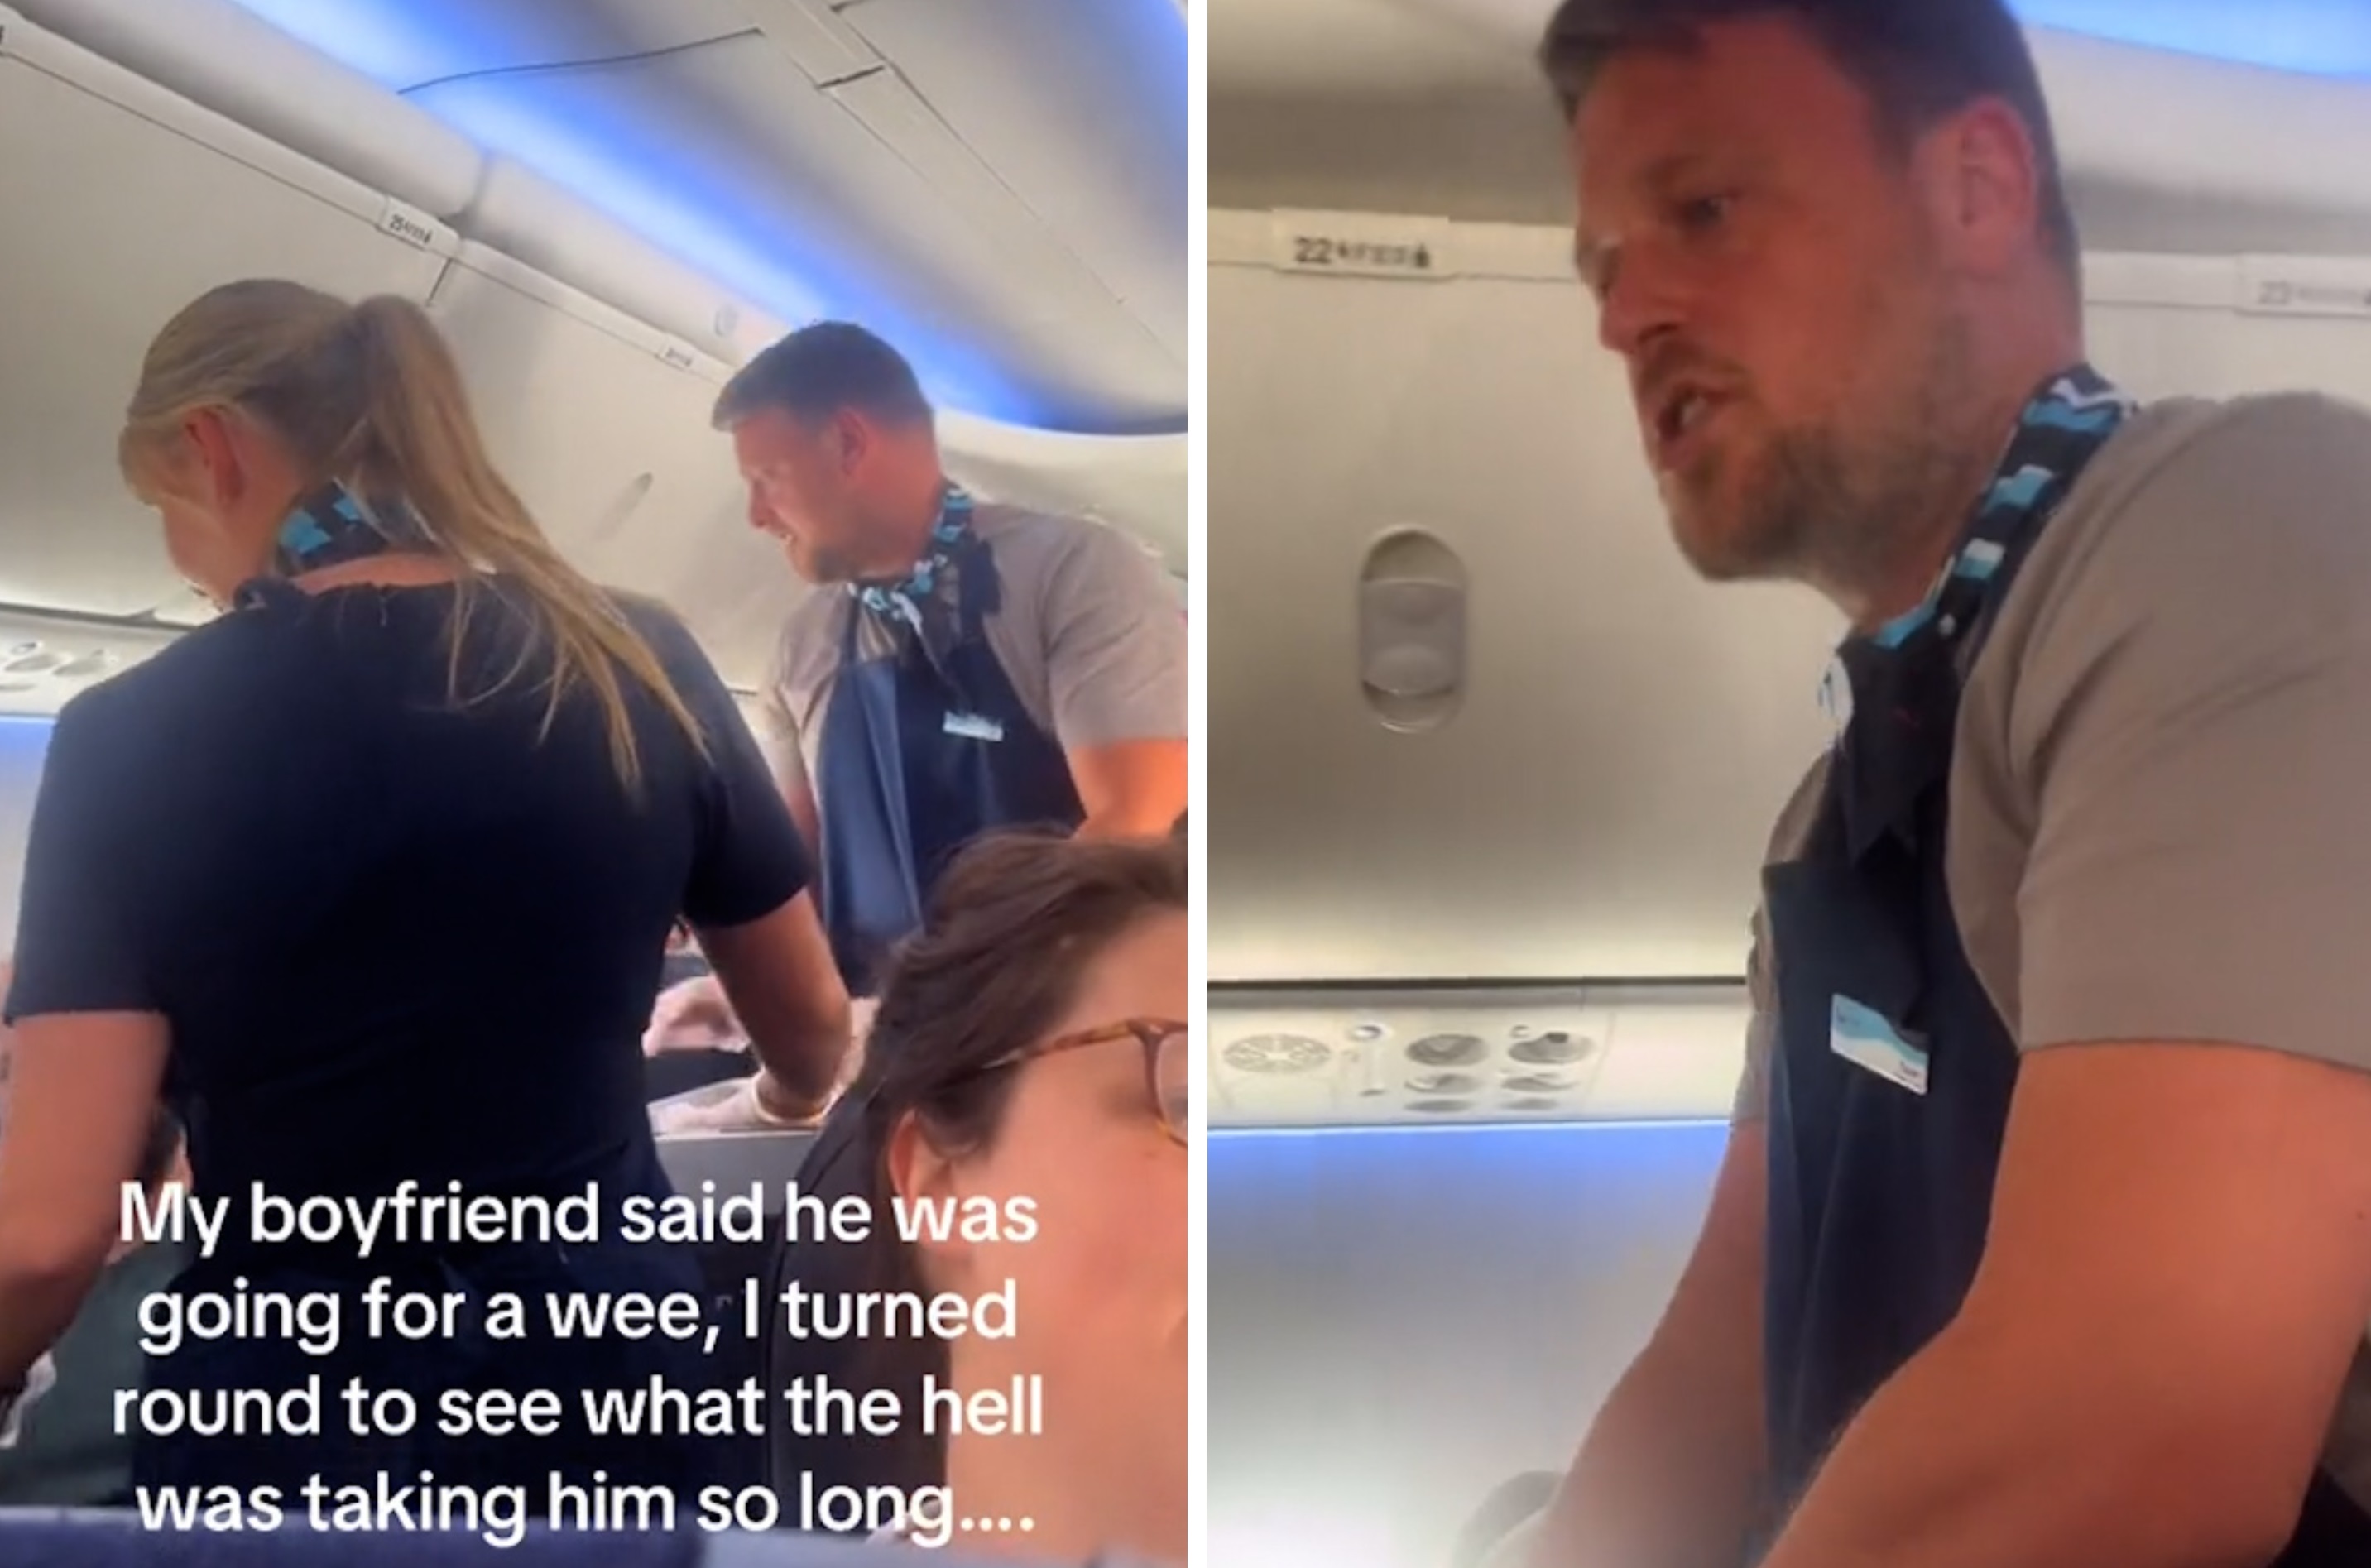 Passenger stunned as boyfriend returns from bathroom with flight attendant